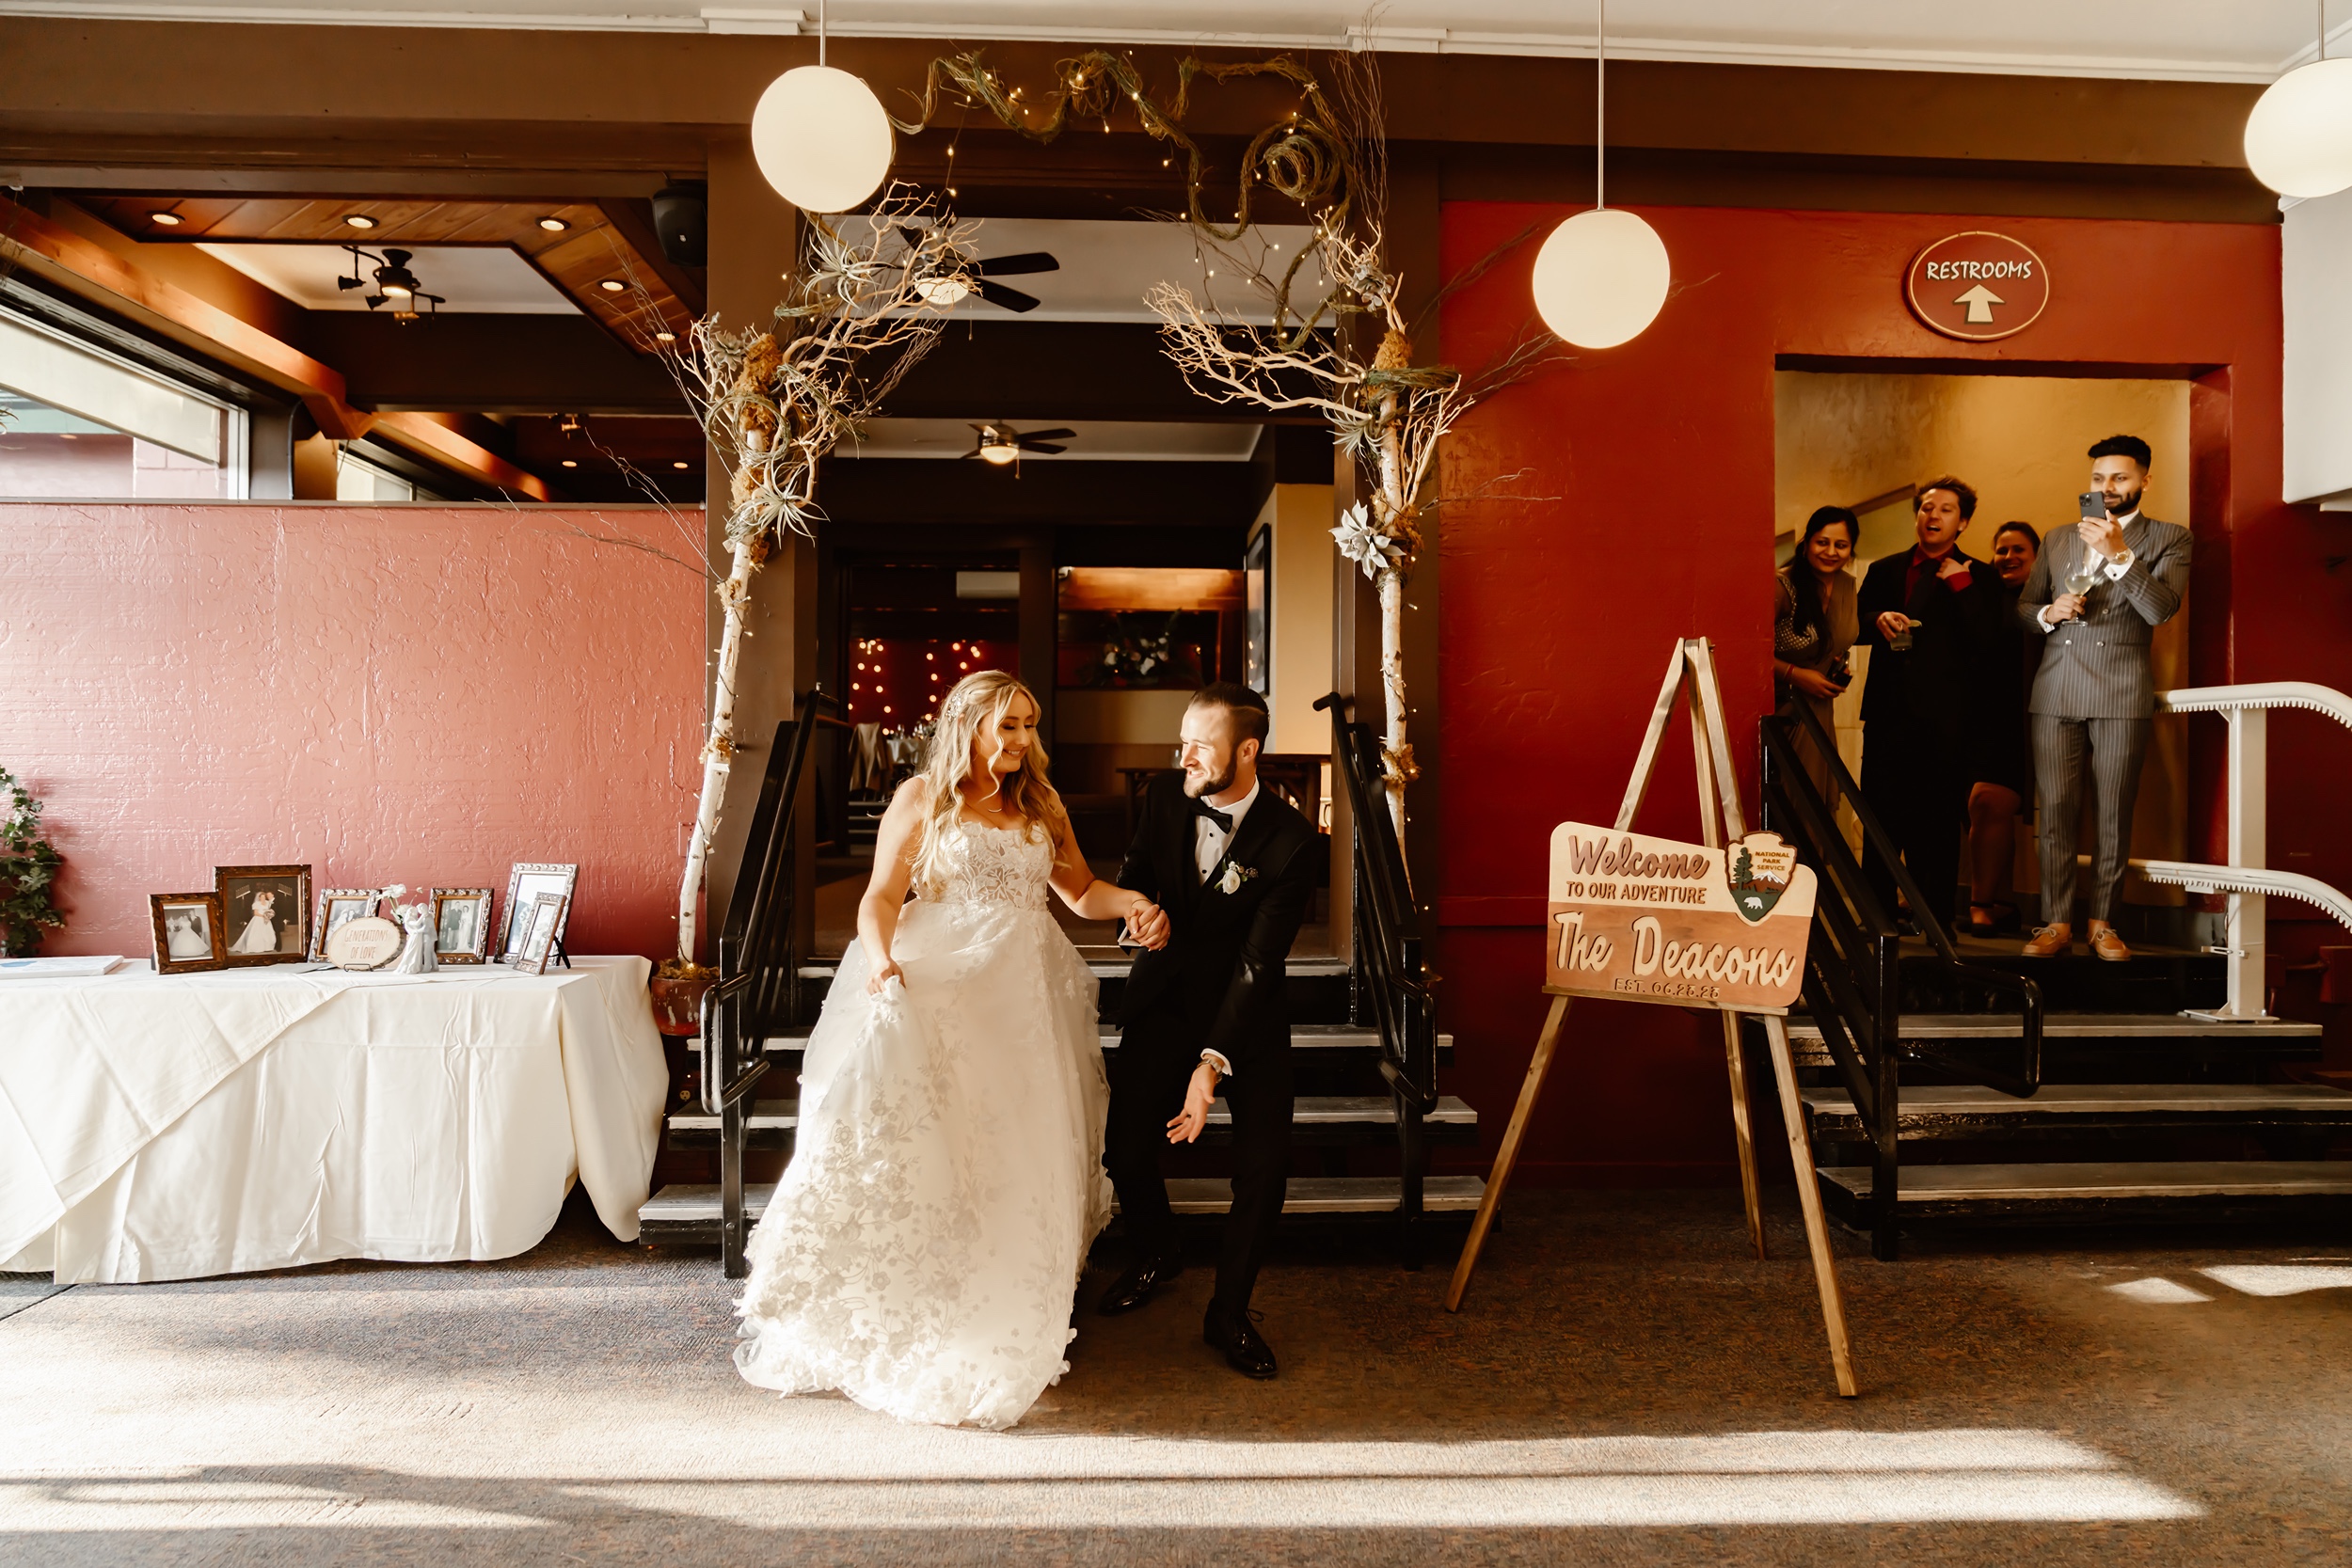 Wedding reception entrance at Heavenly Ski Resort wedding